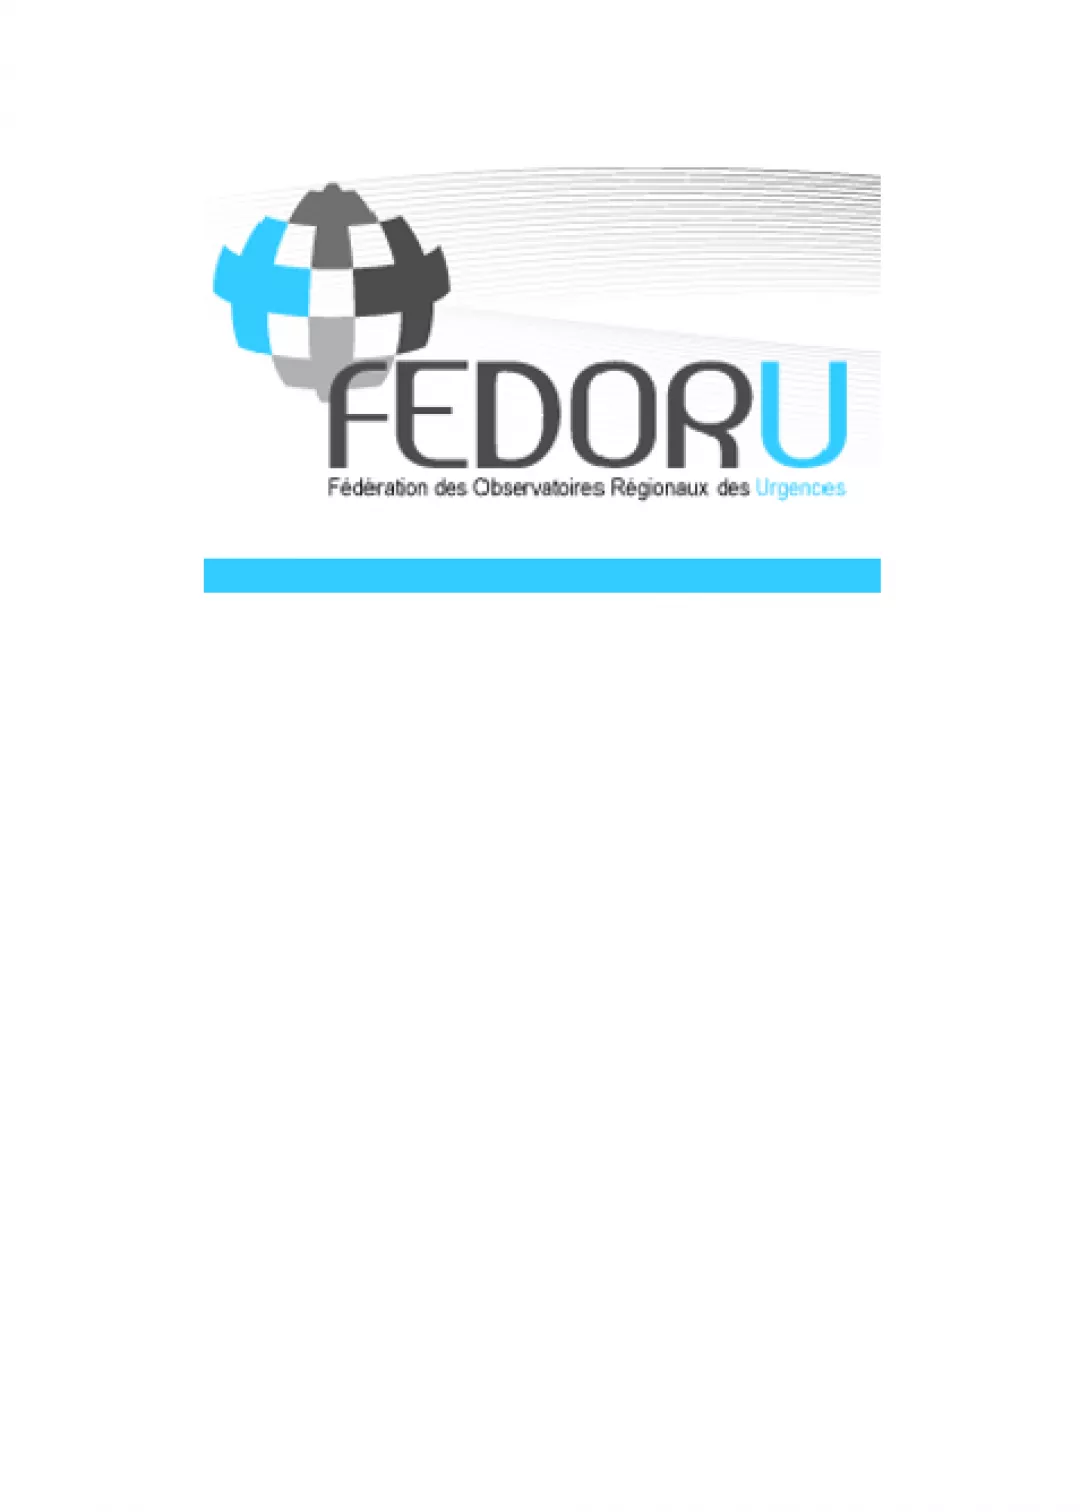 Logo Fédoru